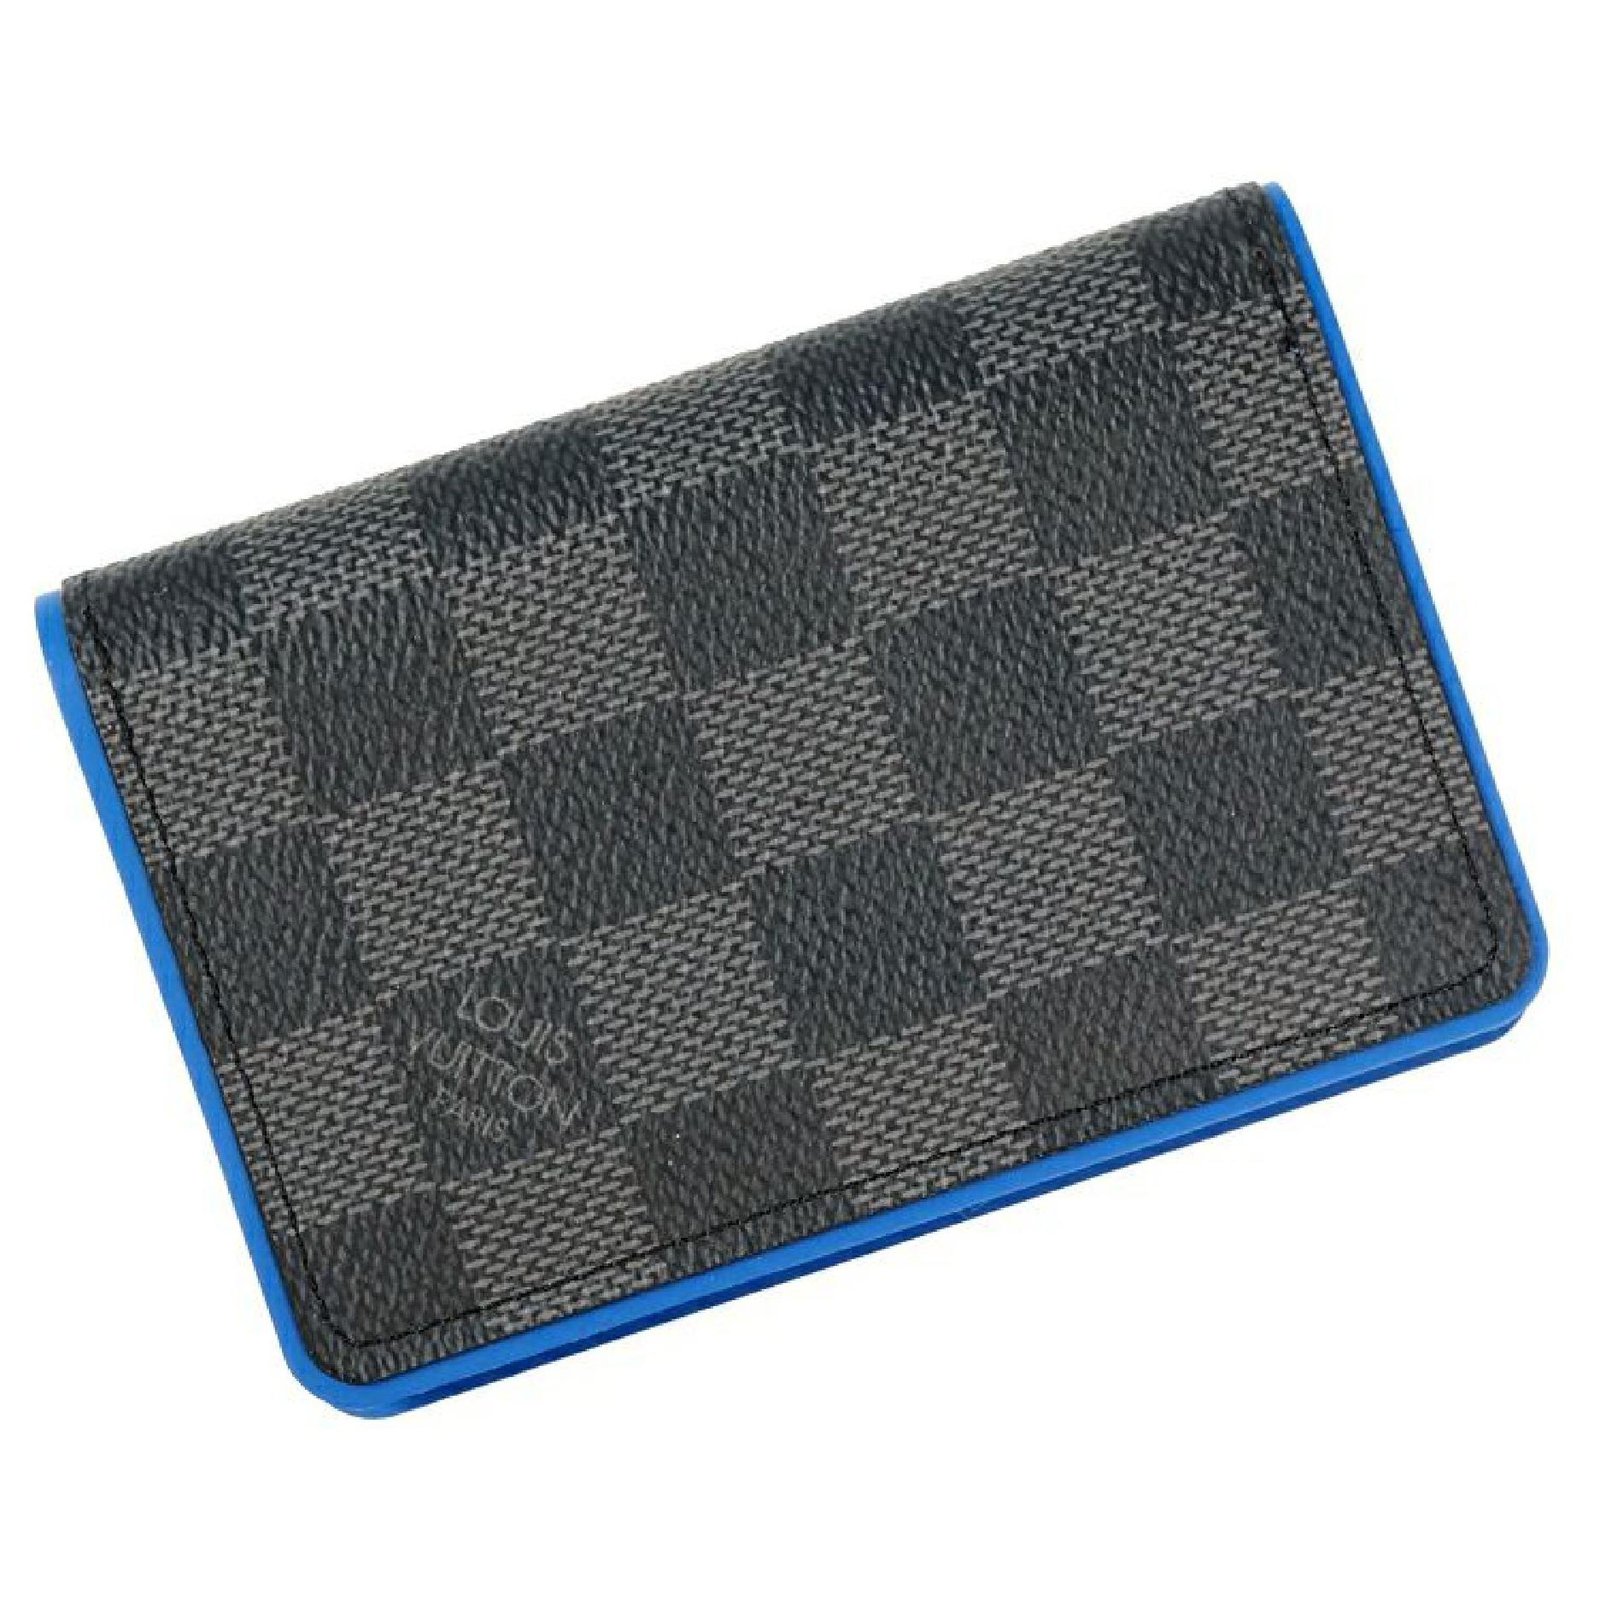 Authentic NEW Louis Vuitton Damier Azur with Blue Leather Cardholder